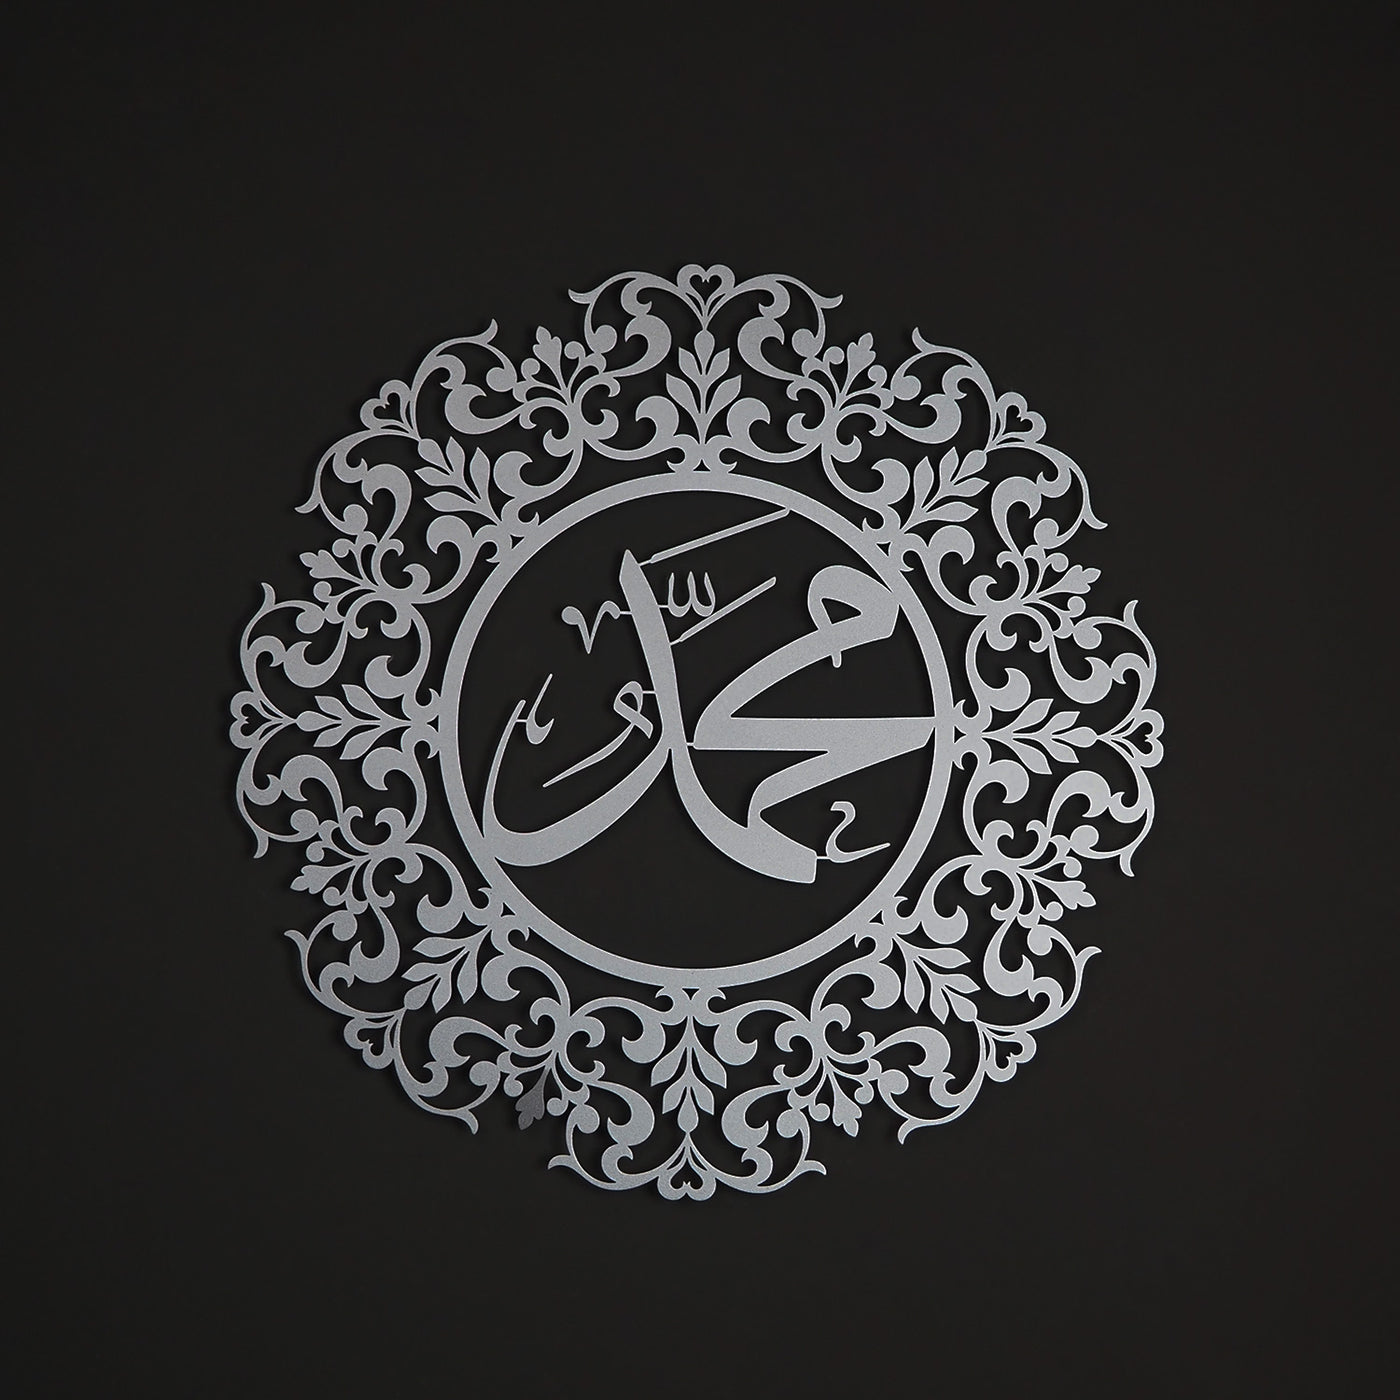 Muhammad (PBUH) Written Islamic Pattern Metal Wall Art - WAM138